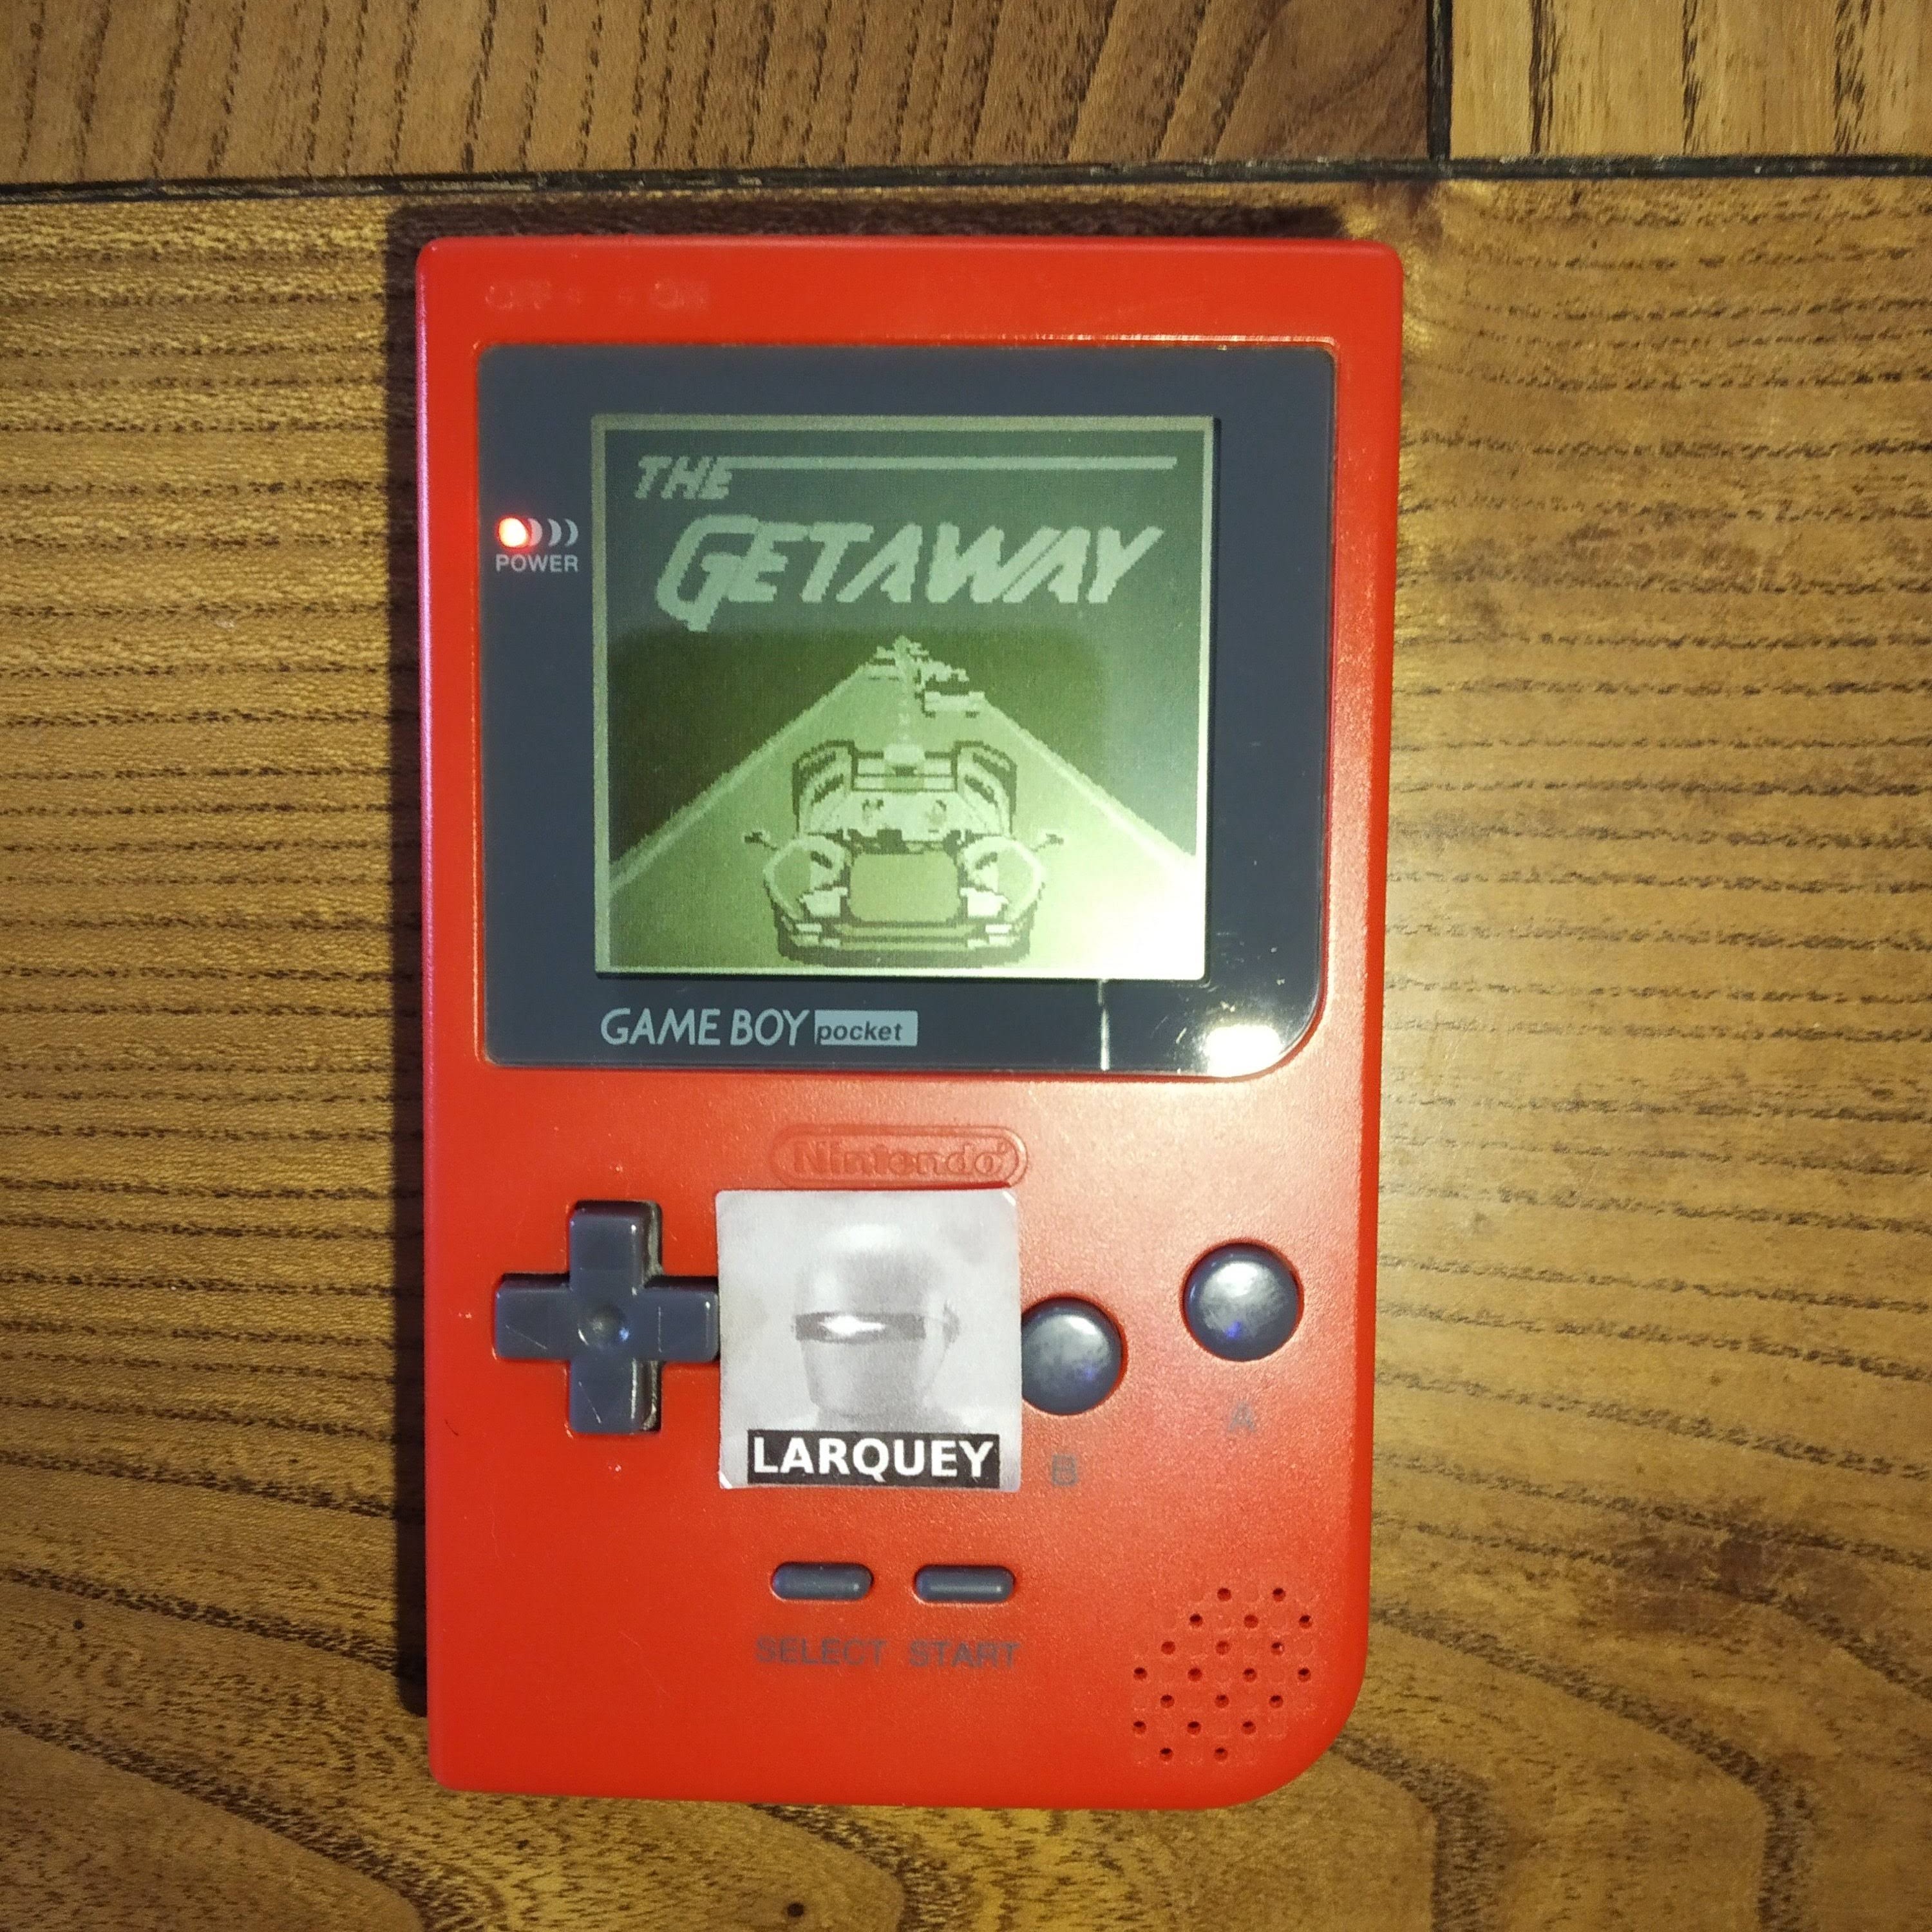 Larquey: The Getaway: High Speed II (Game Boy) 35,353,200 points on 2020-06-04 09:31:20